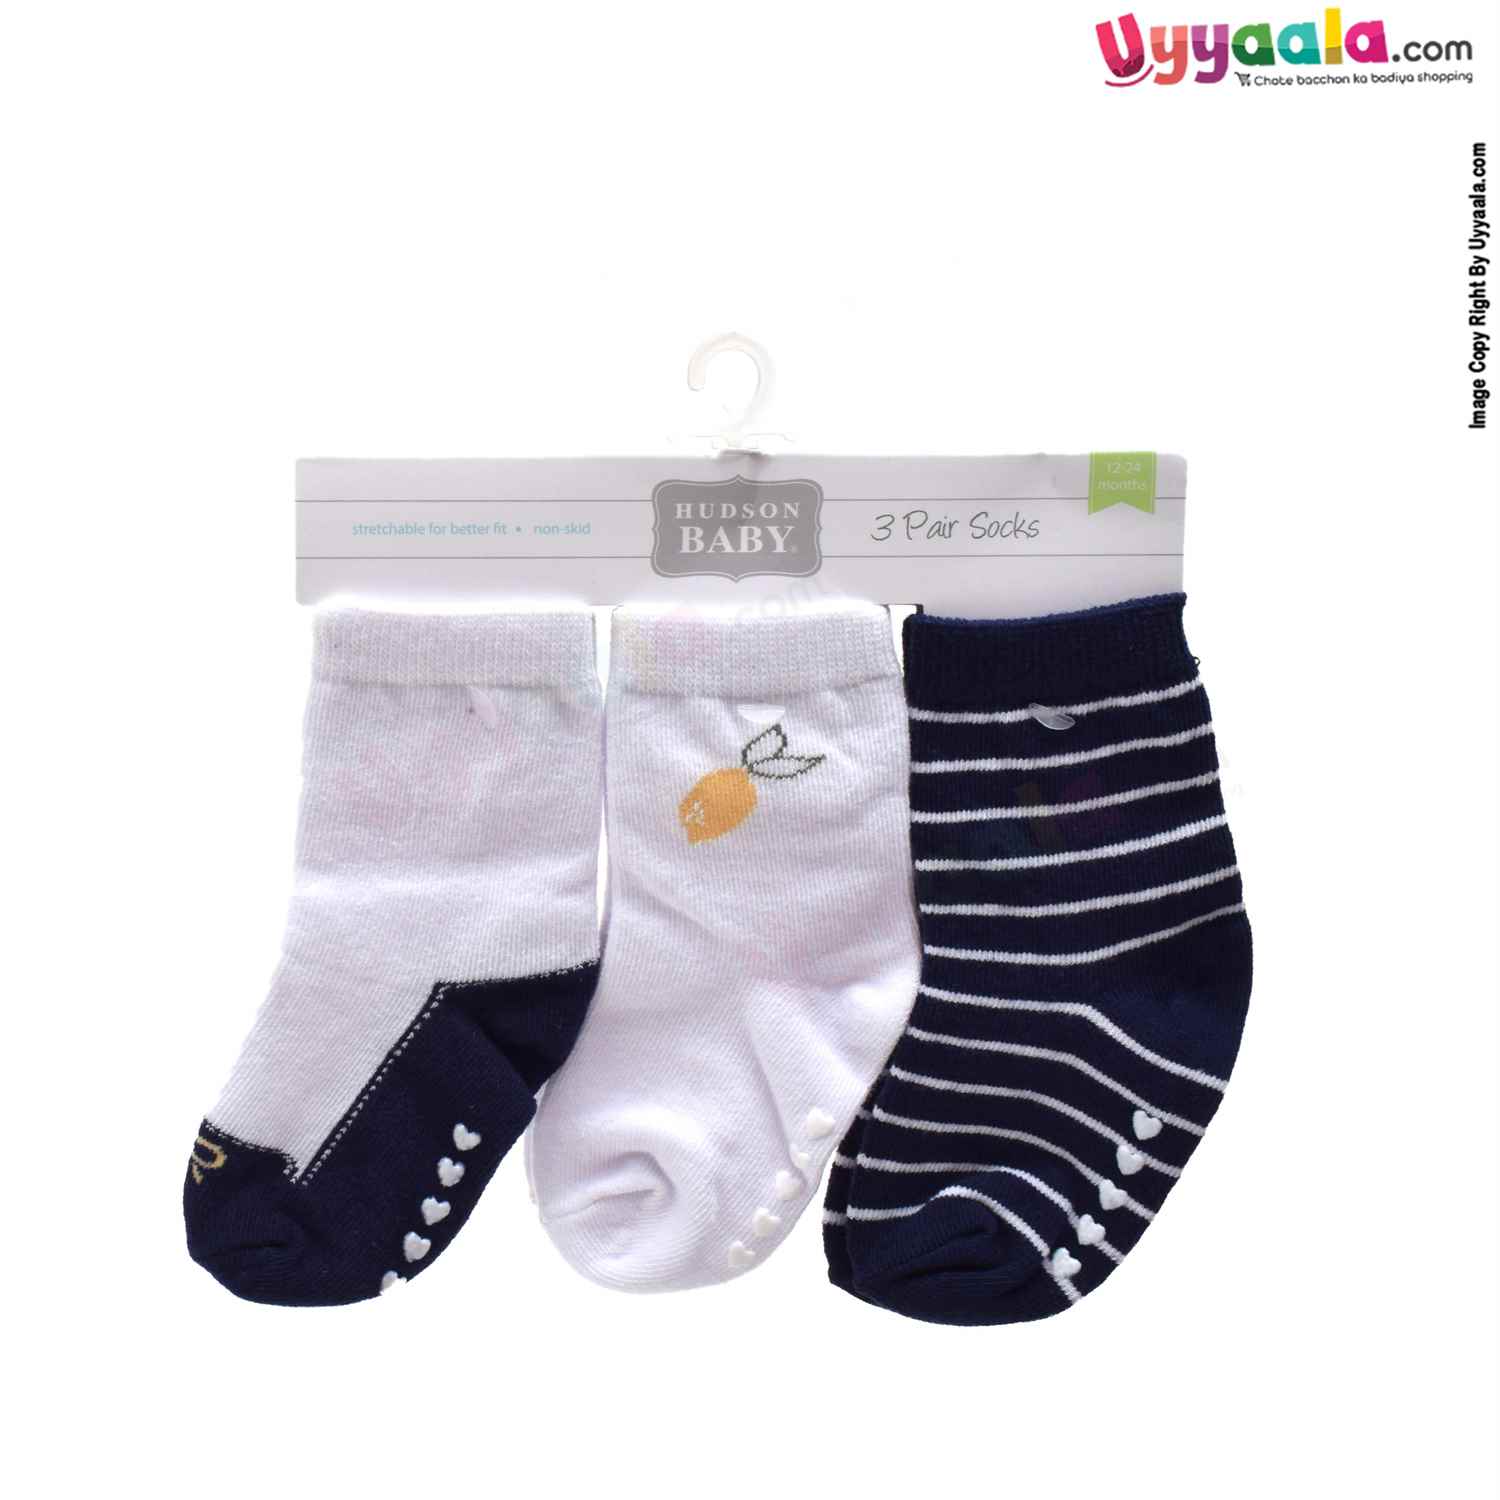 HUDSON BABY Stretchable & Non Skid Socks 3p Set with Multi Print, 12-24 m Age- Navy Blue & White